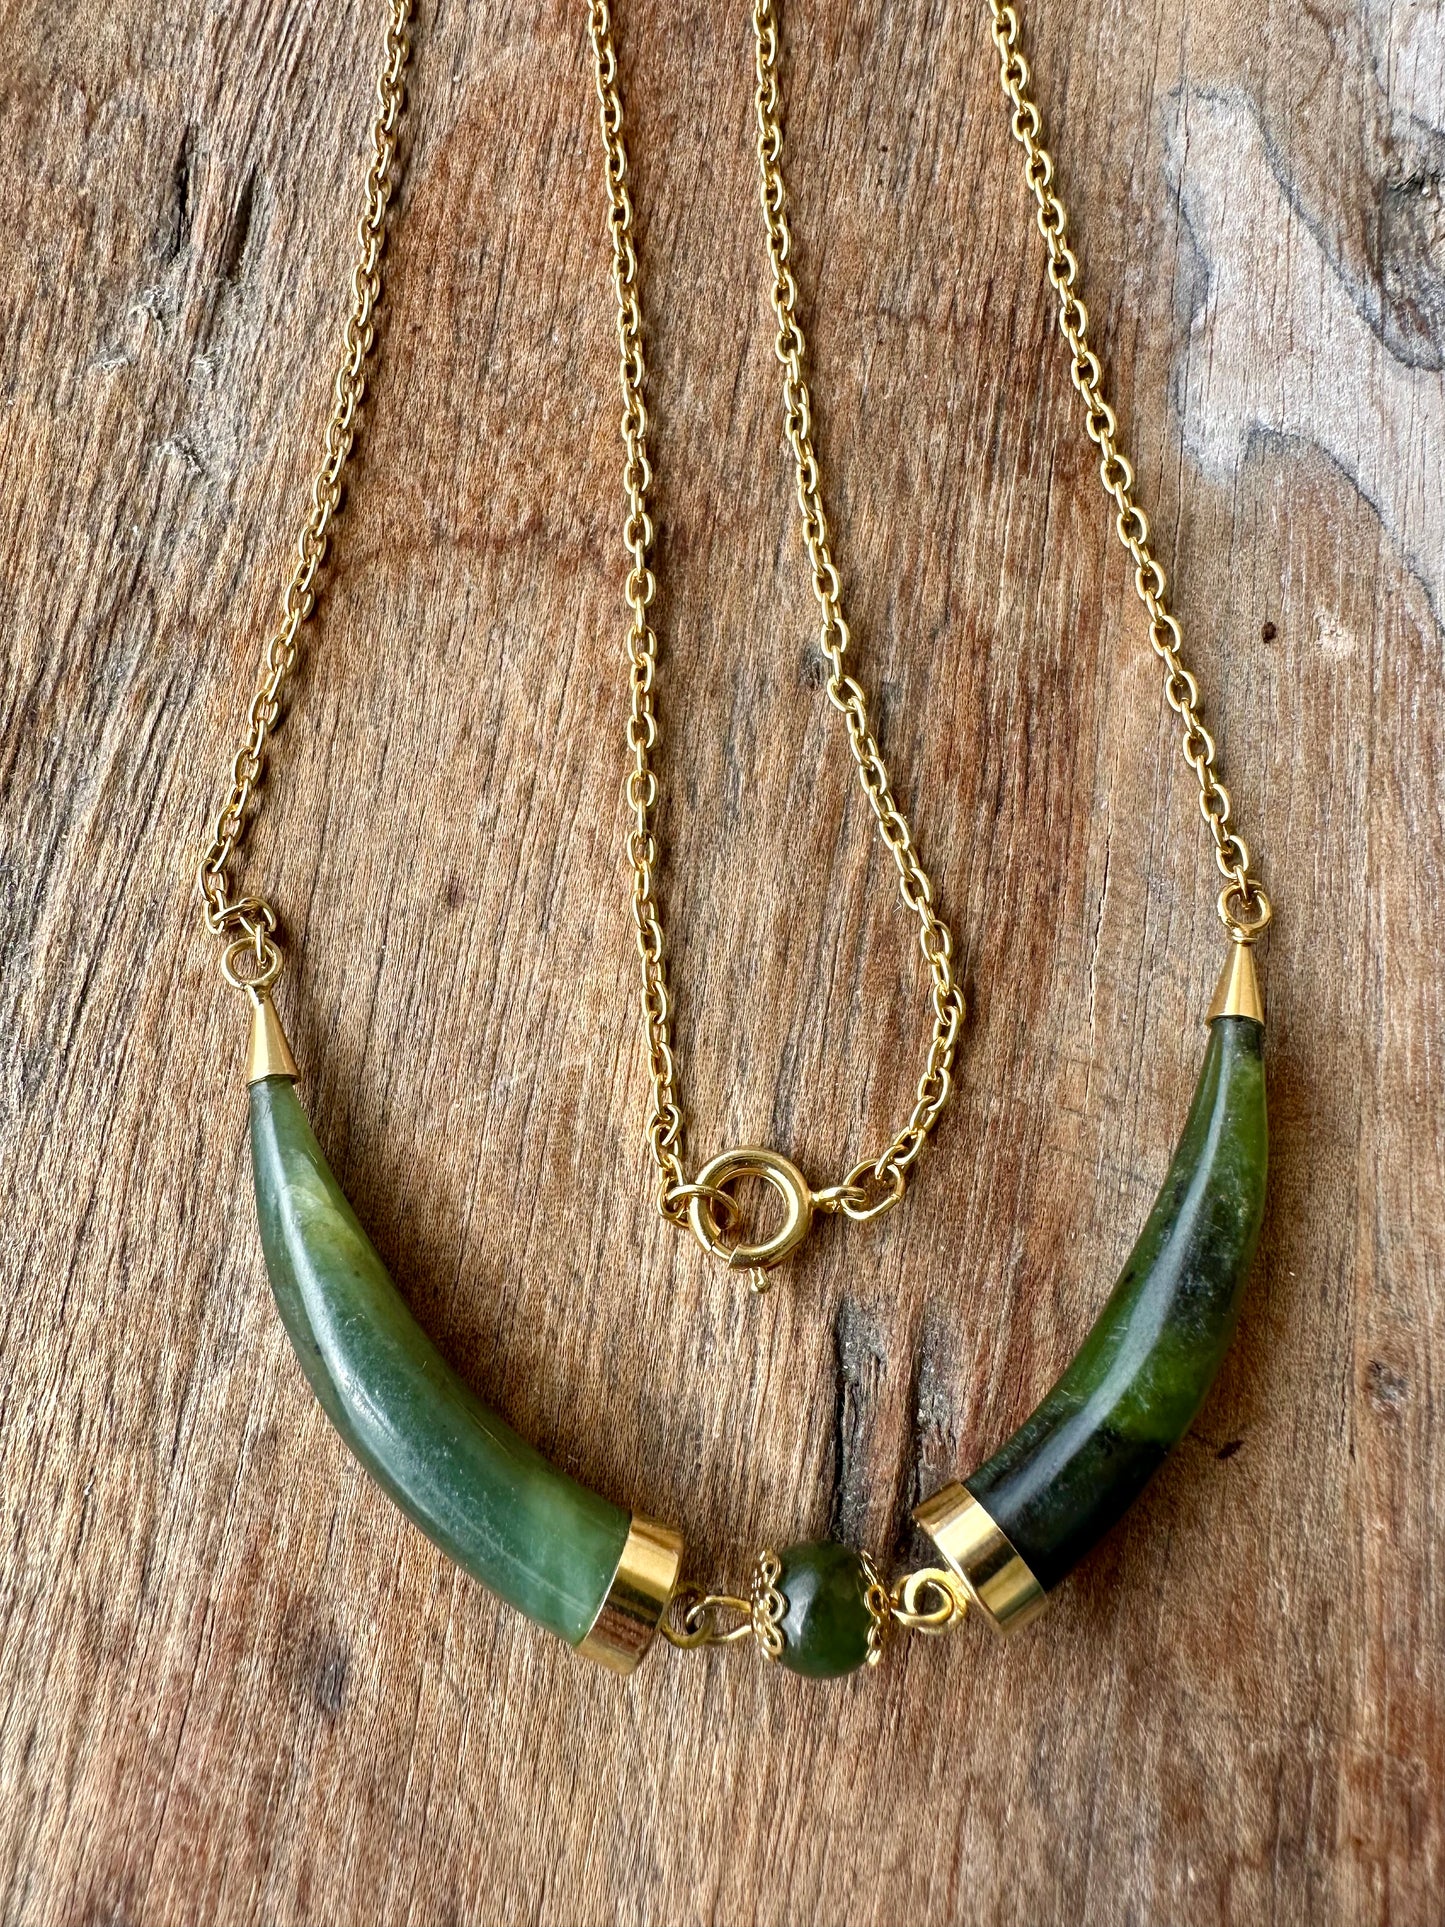 Attractive Australian Cowell jade necklace